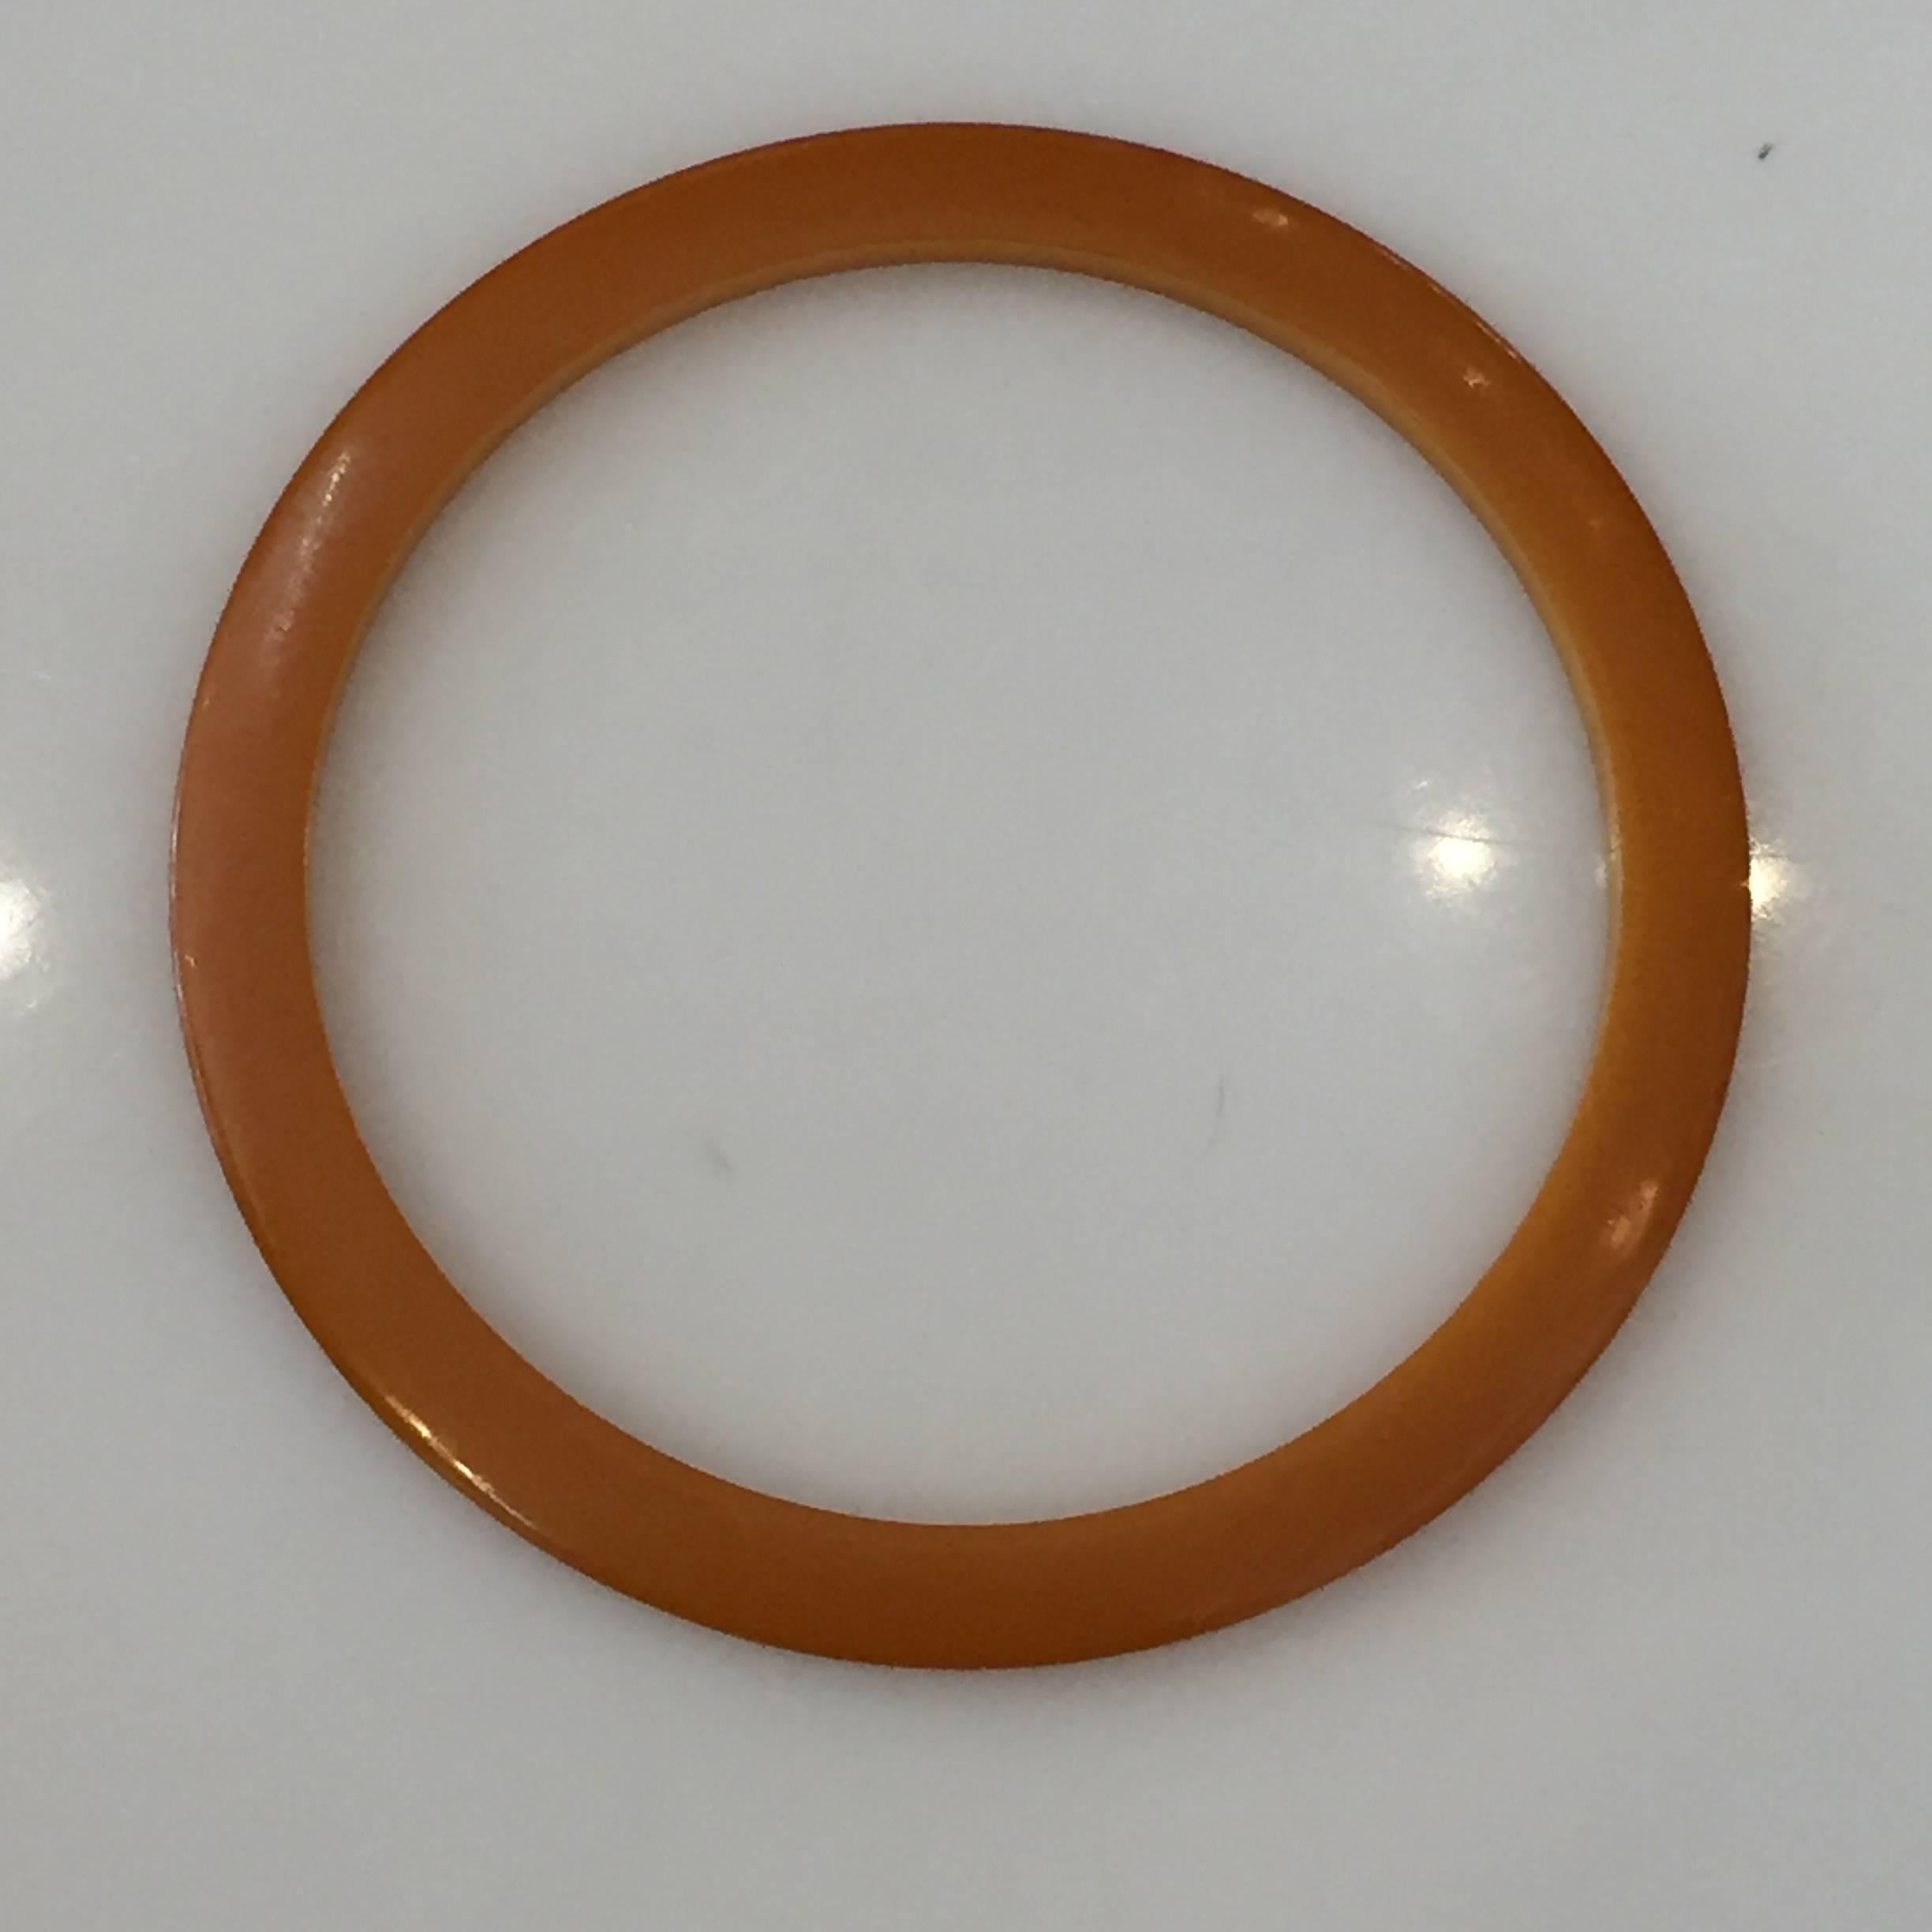 Art Deco Bakelite bracelet in a butterscotch amber color.


Measures: 2 1/2